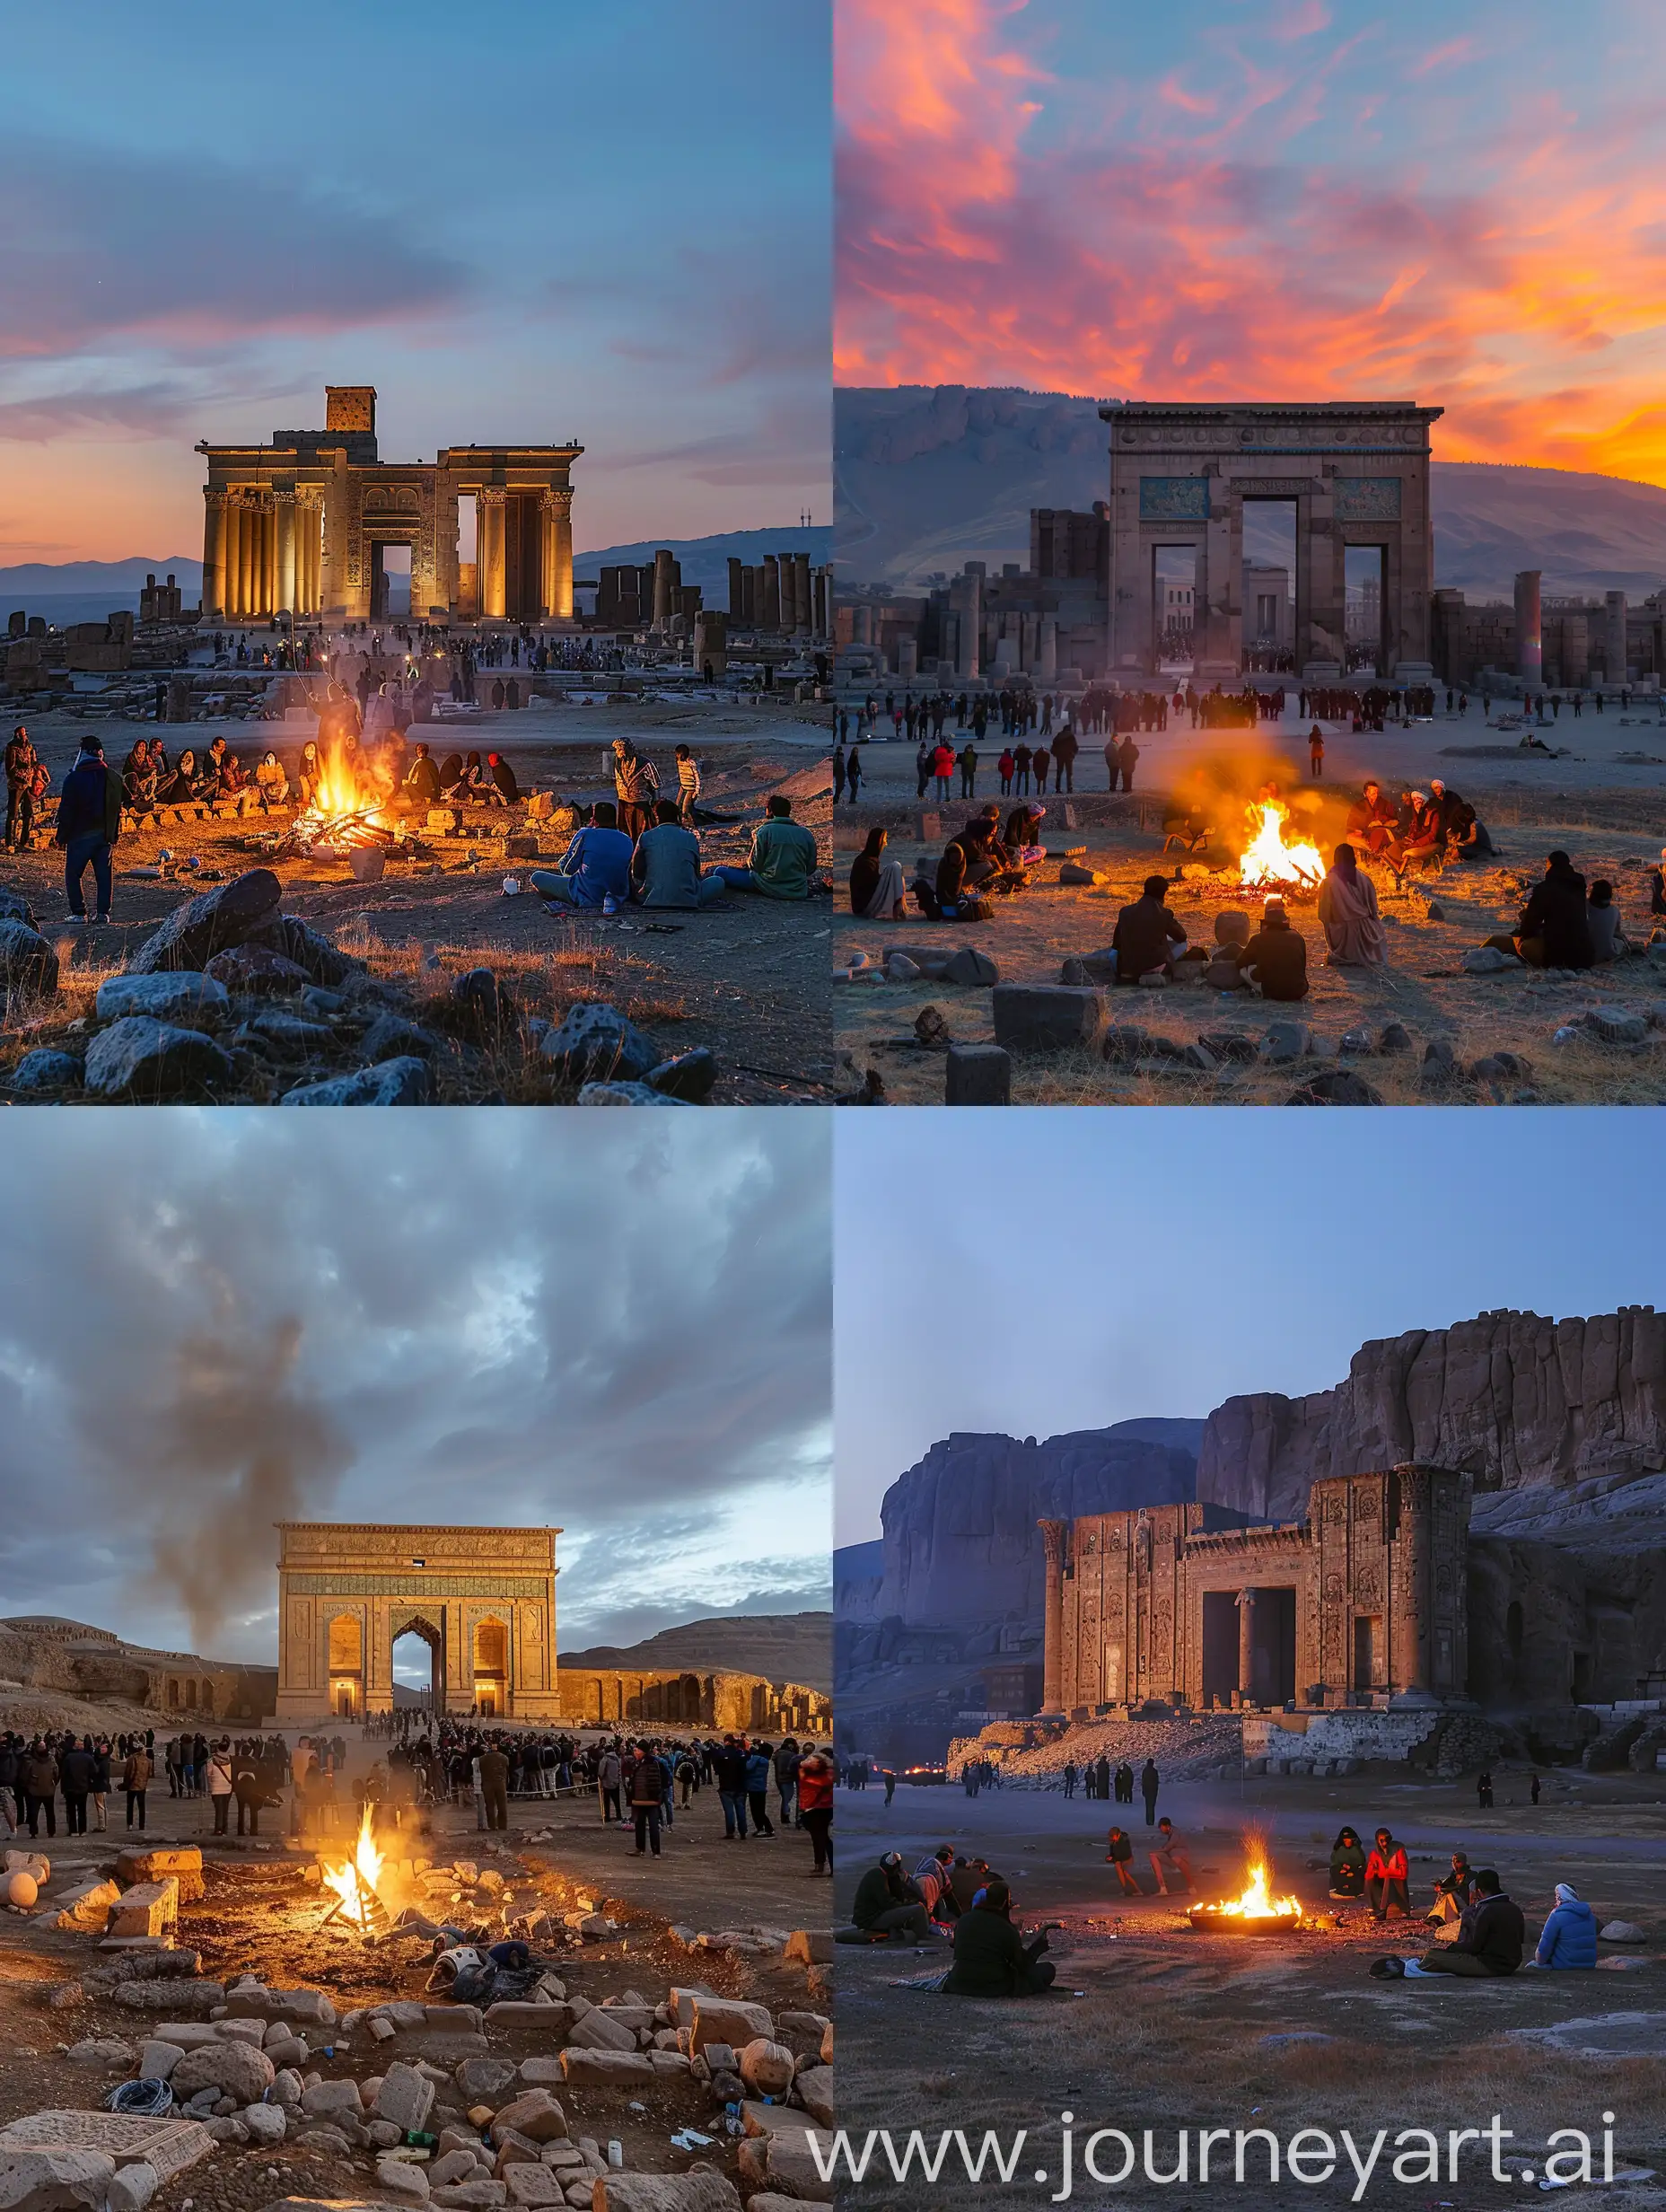 Gathering-at-Persepolis-Vibrant-Community-Celebrating-Around-the-Fire